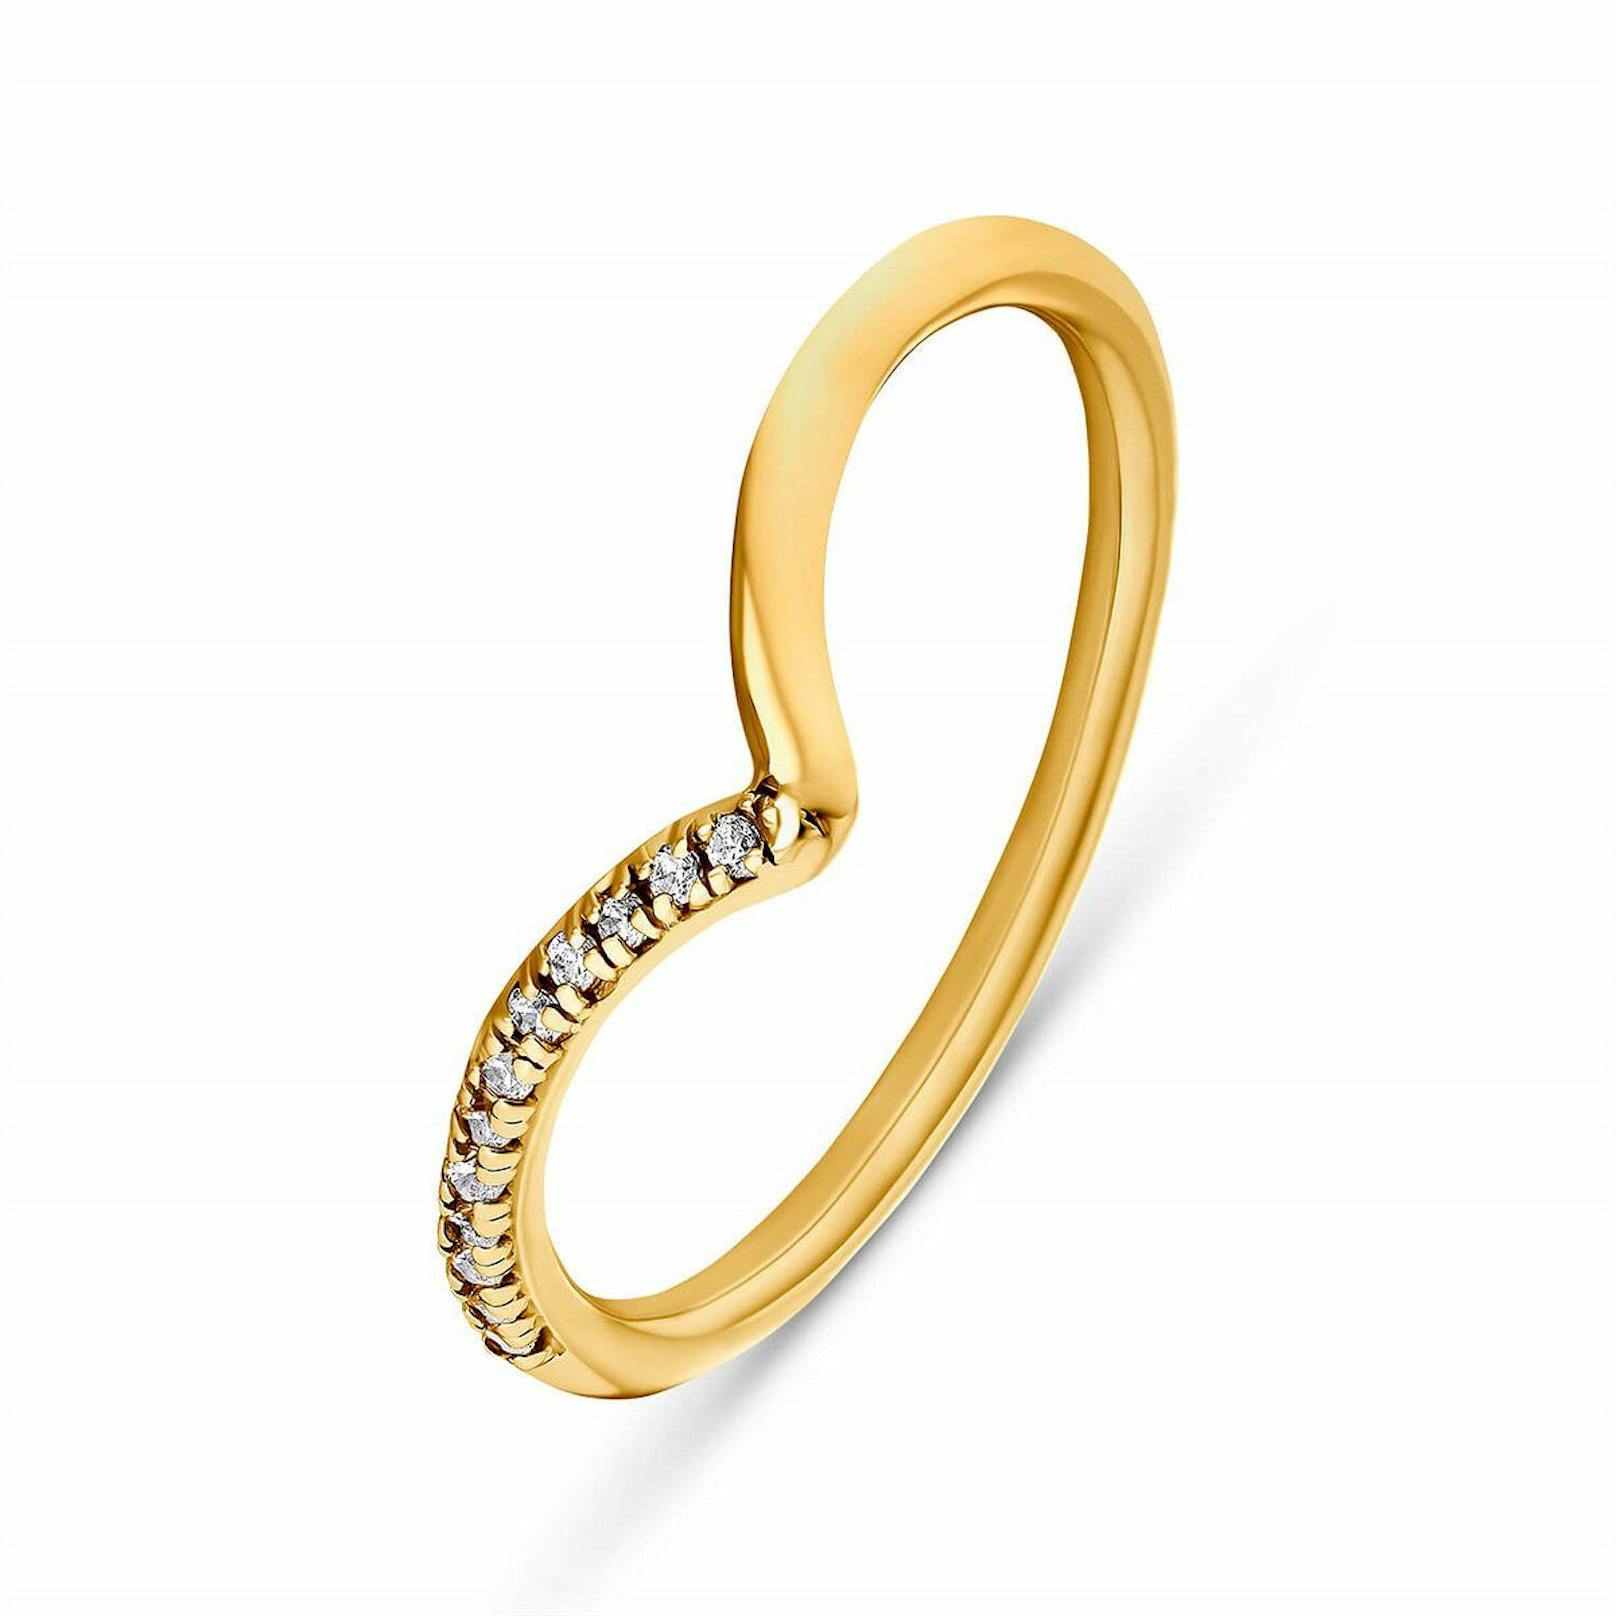 Ring Brillanten, gelbgold, 399 Euro